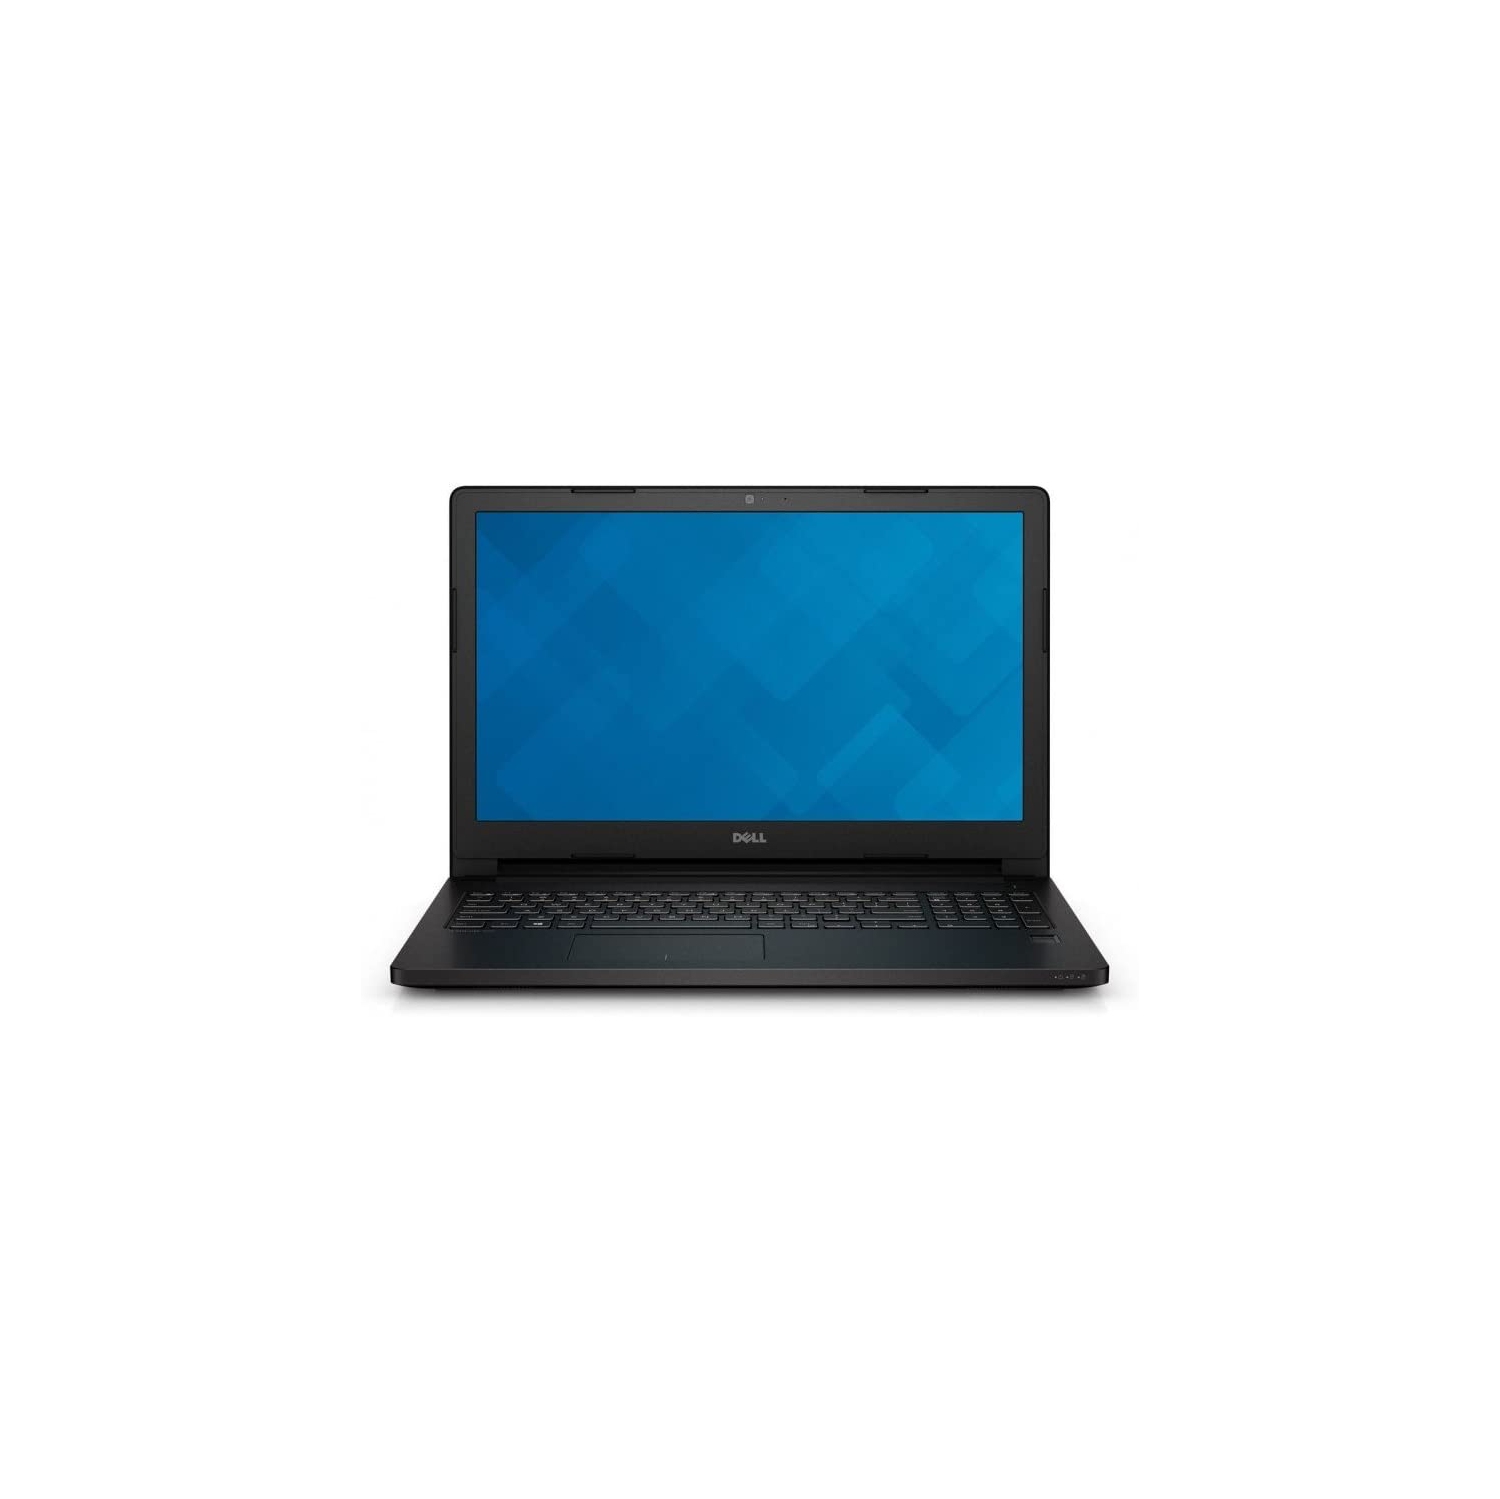 Refurbished (Good) - Dell Latitude 15 3570 Laptop (Intel Core i3 6100u, 8GB Ram, 500GB HD, Webcam, Win 10, 15.6")